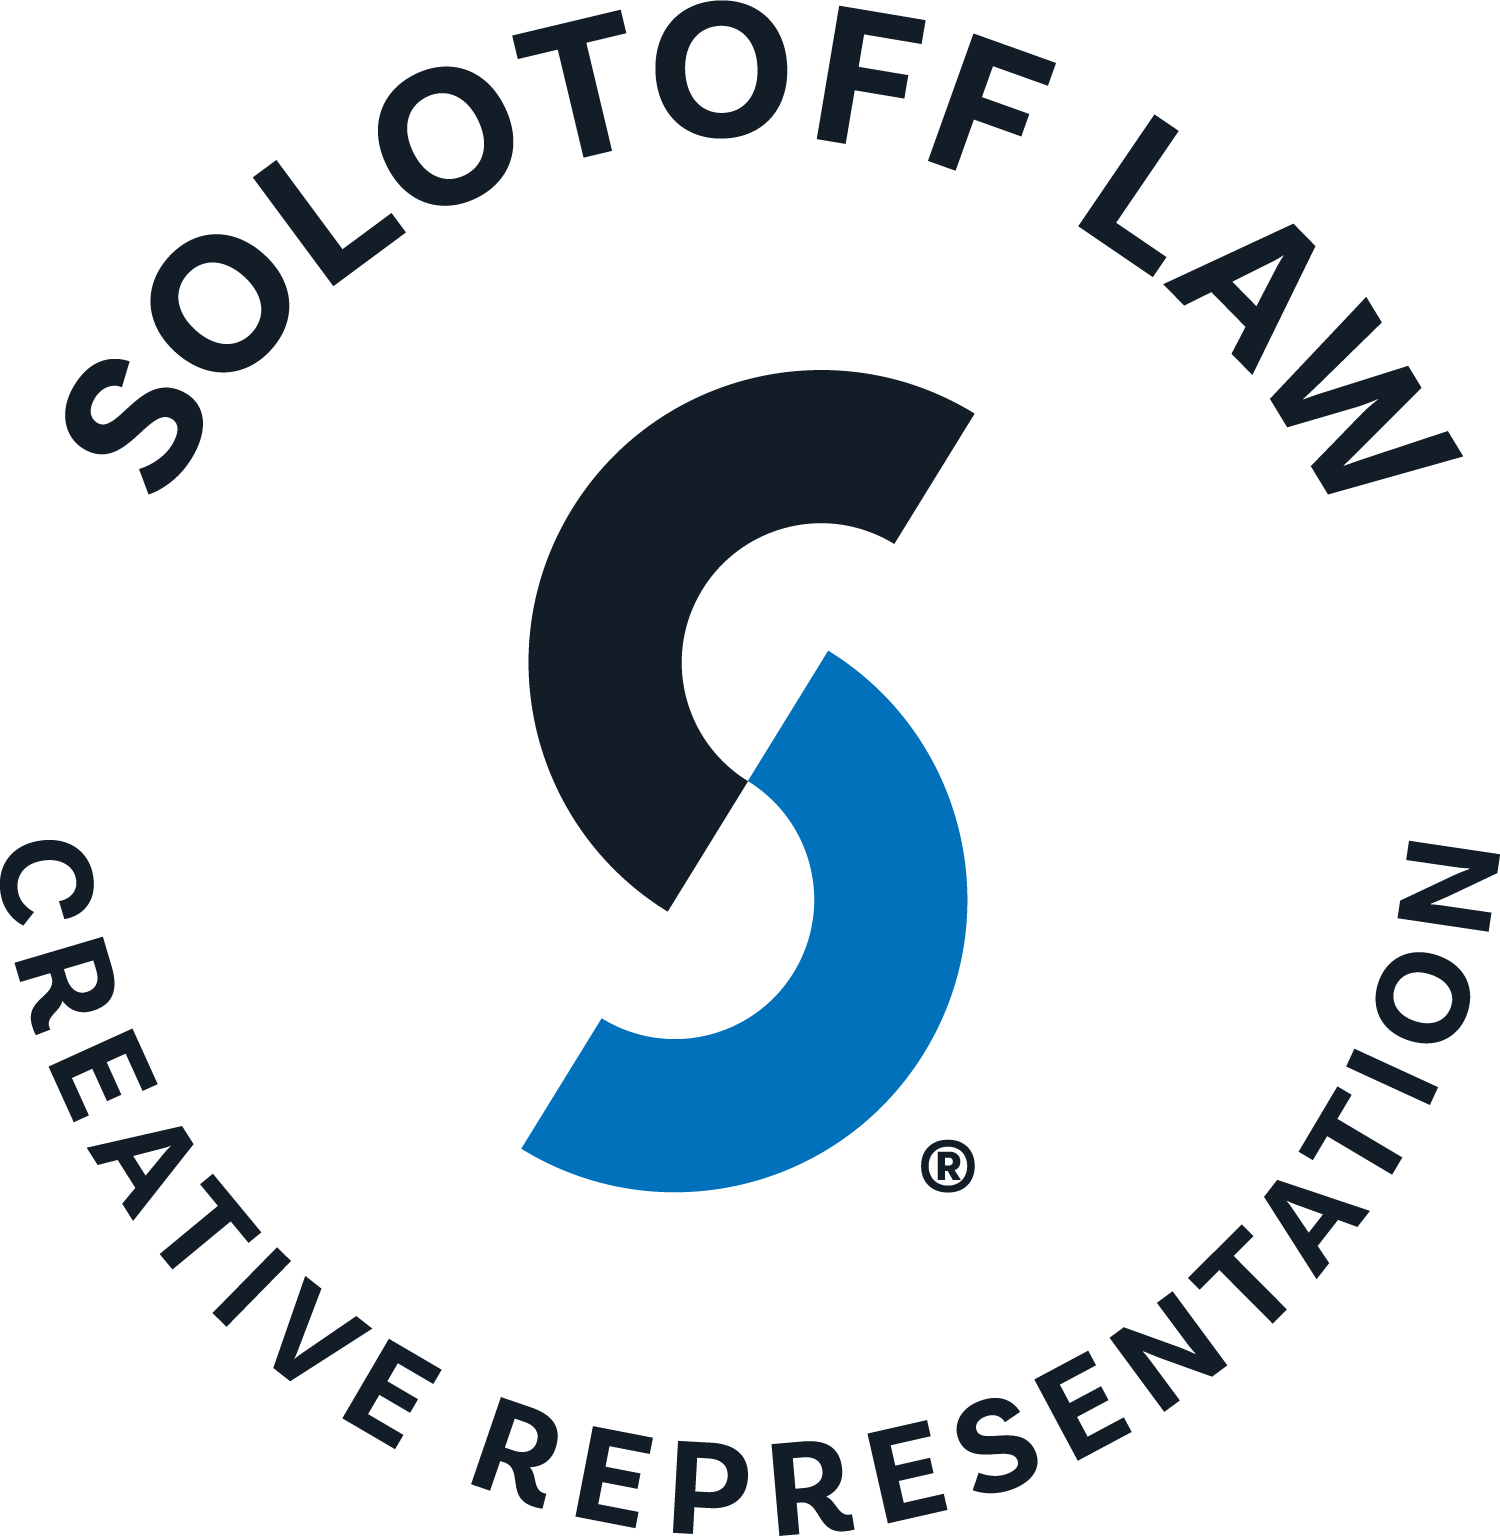 Solotoff Law